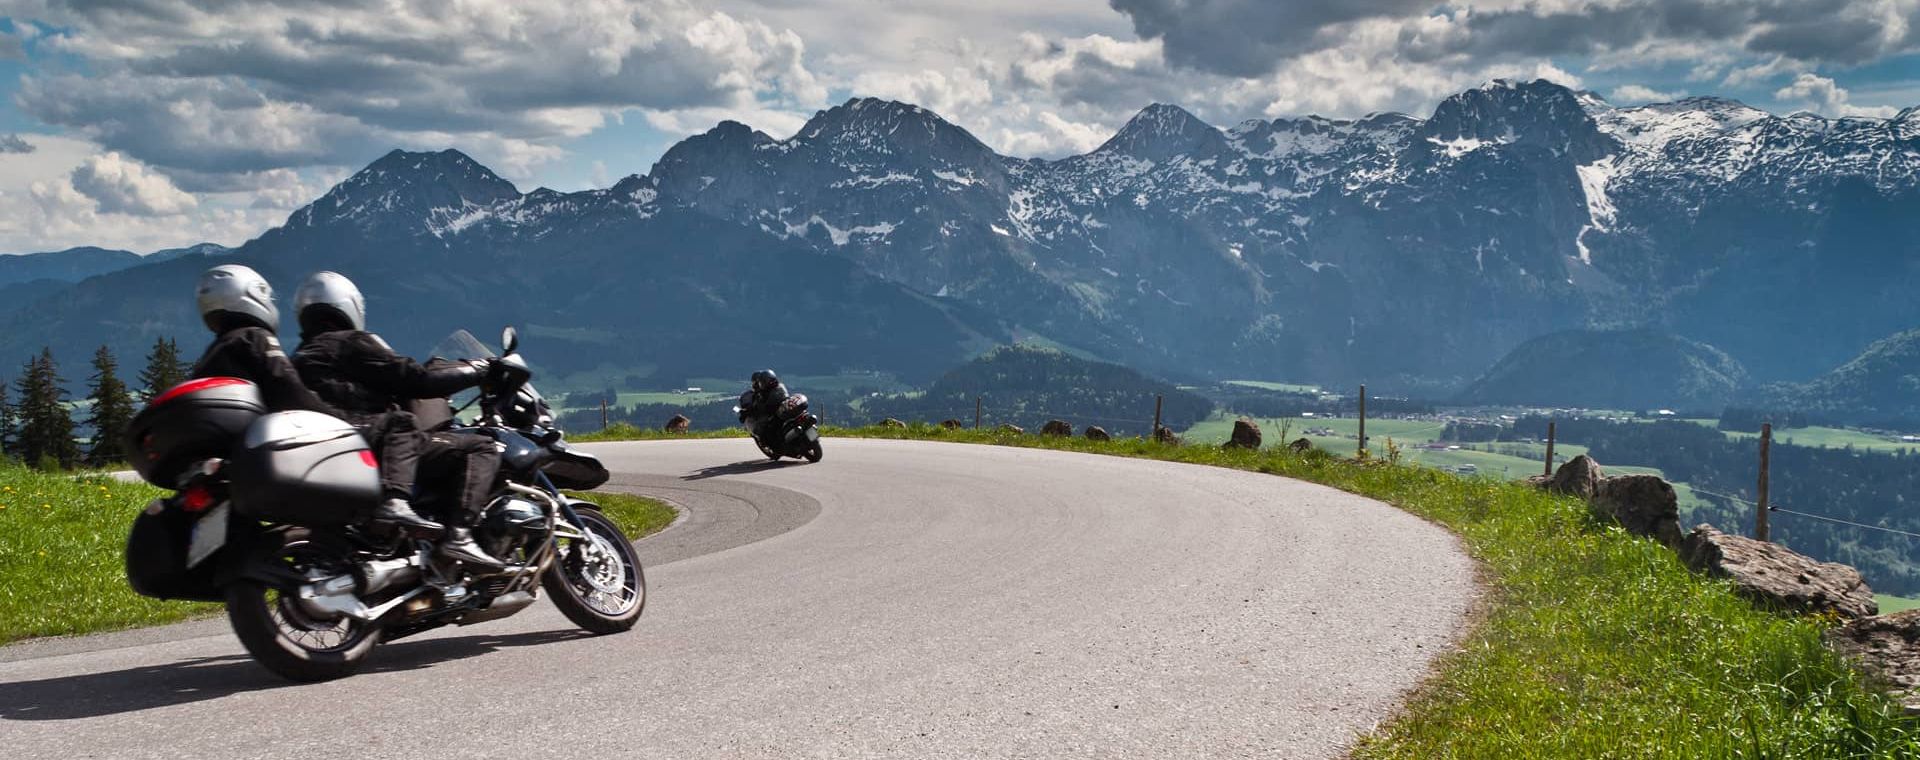 best motorcycle travel insurance europe